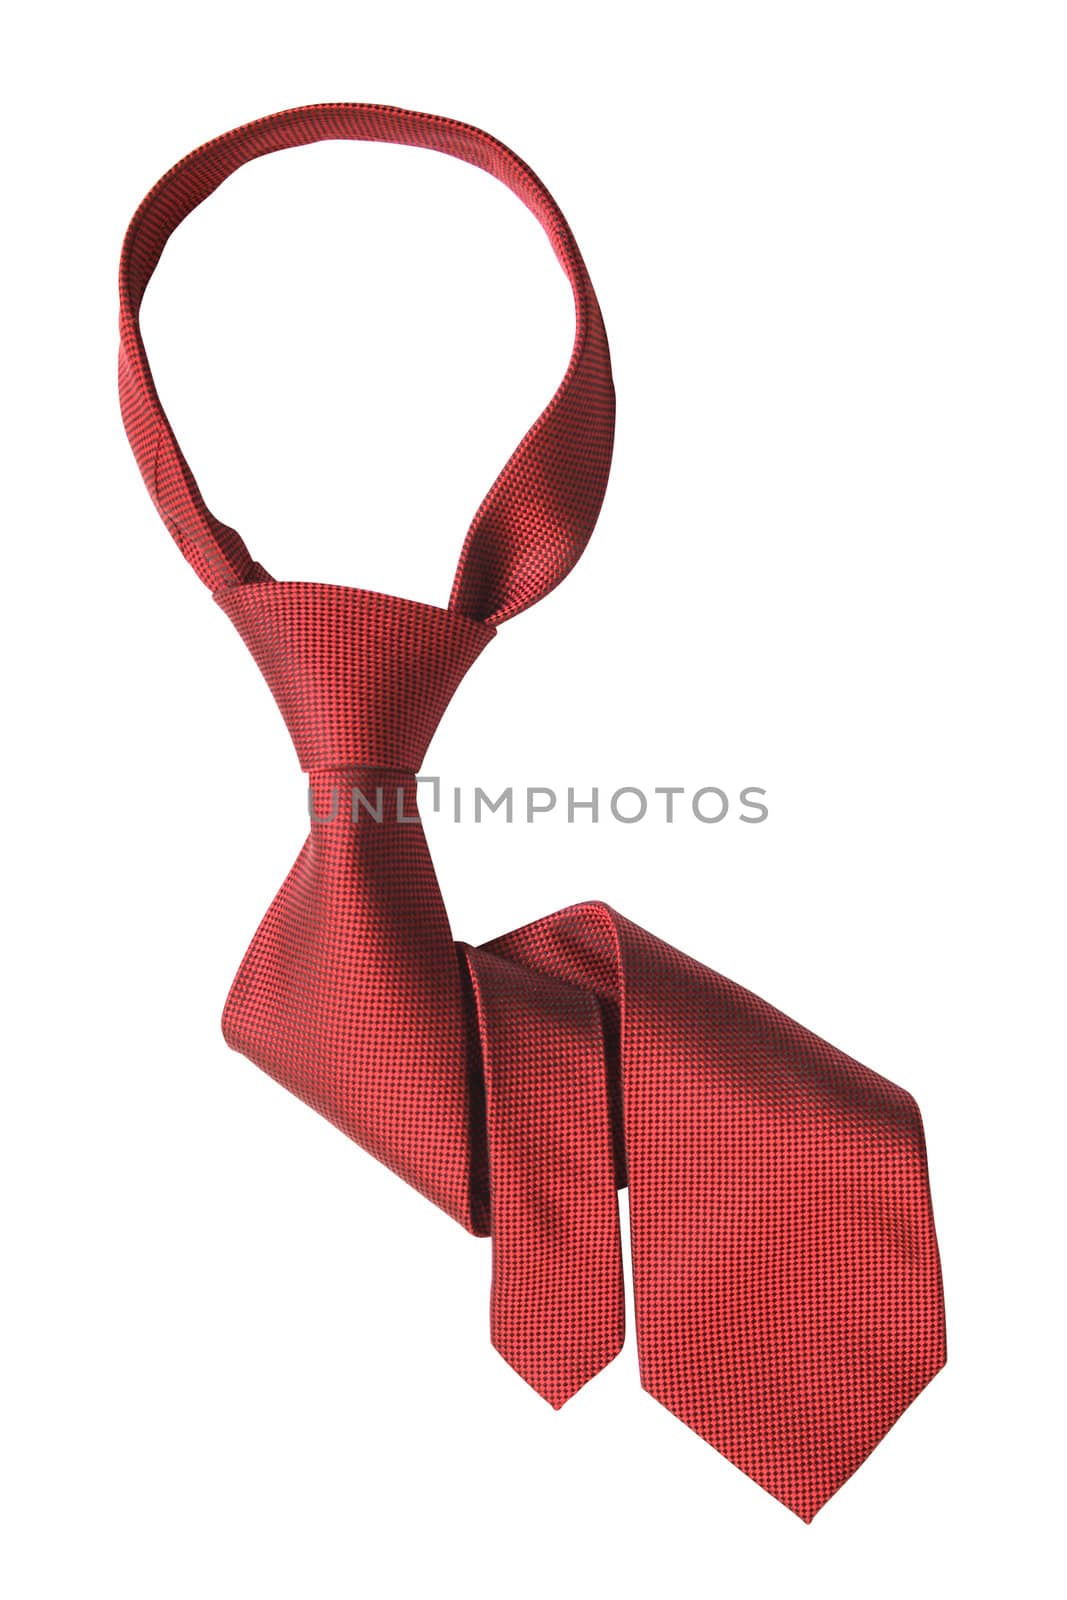 Red Necktie On White by kvkirillov